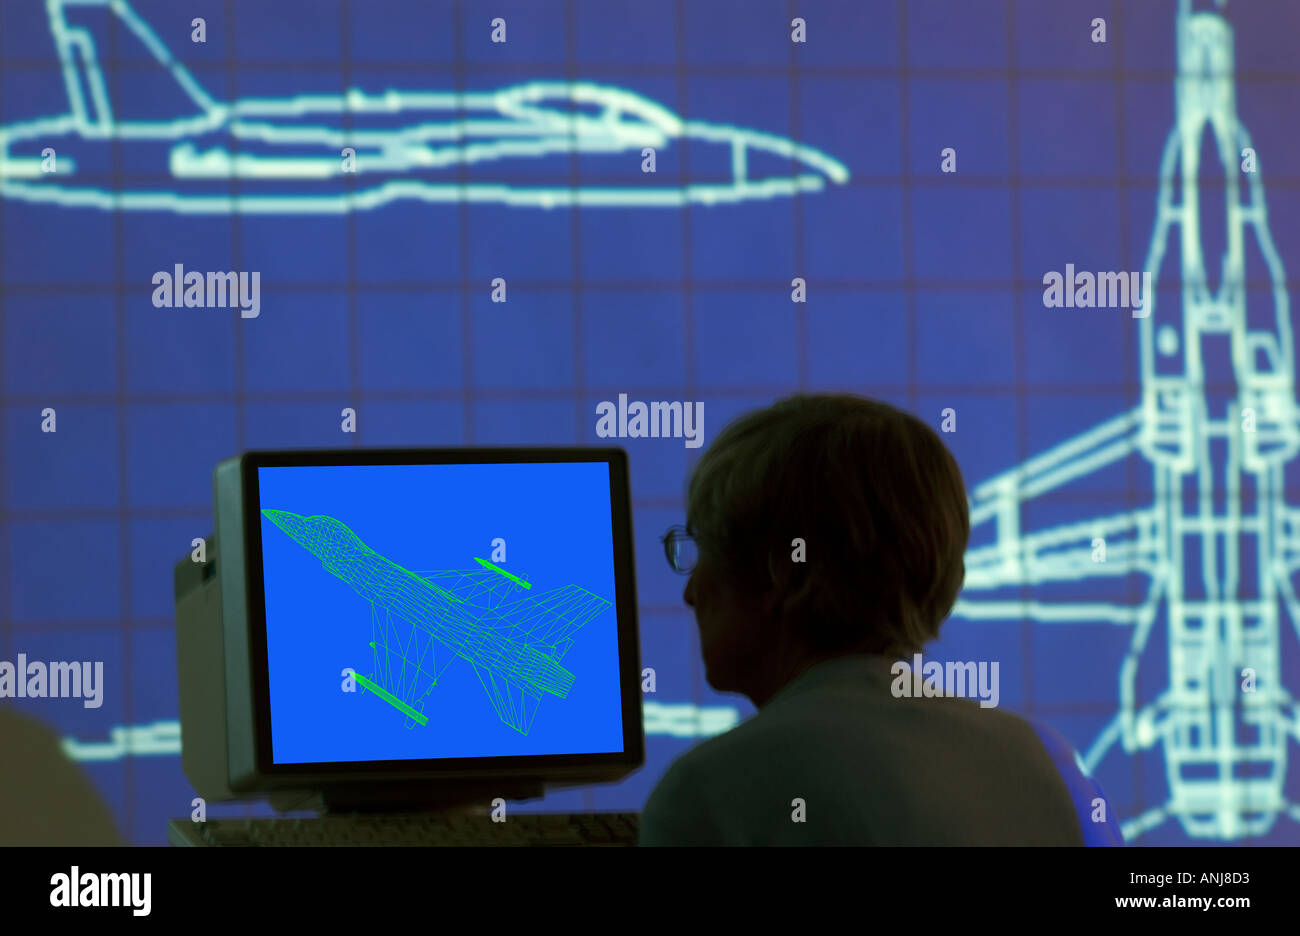 aeronautical designer with jet airplane image on monitor Stock Photo